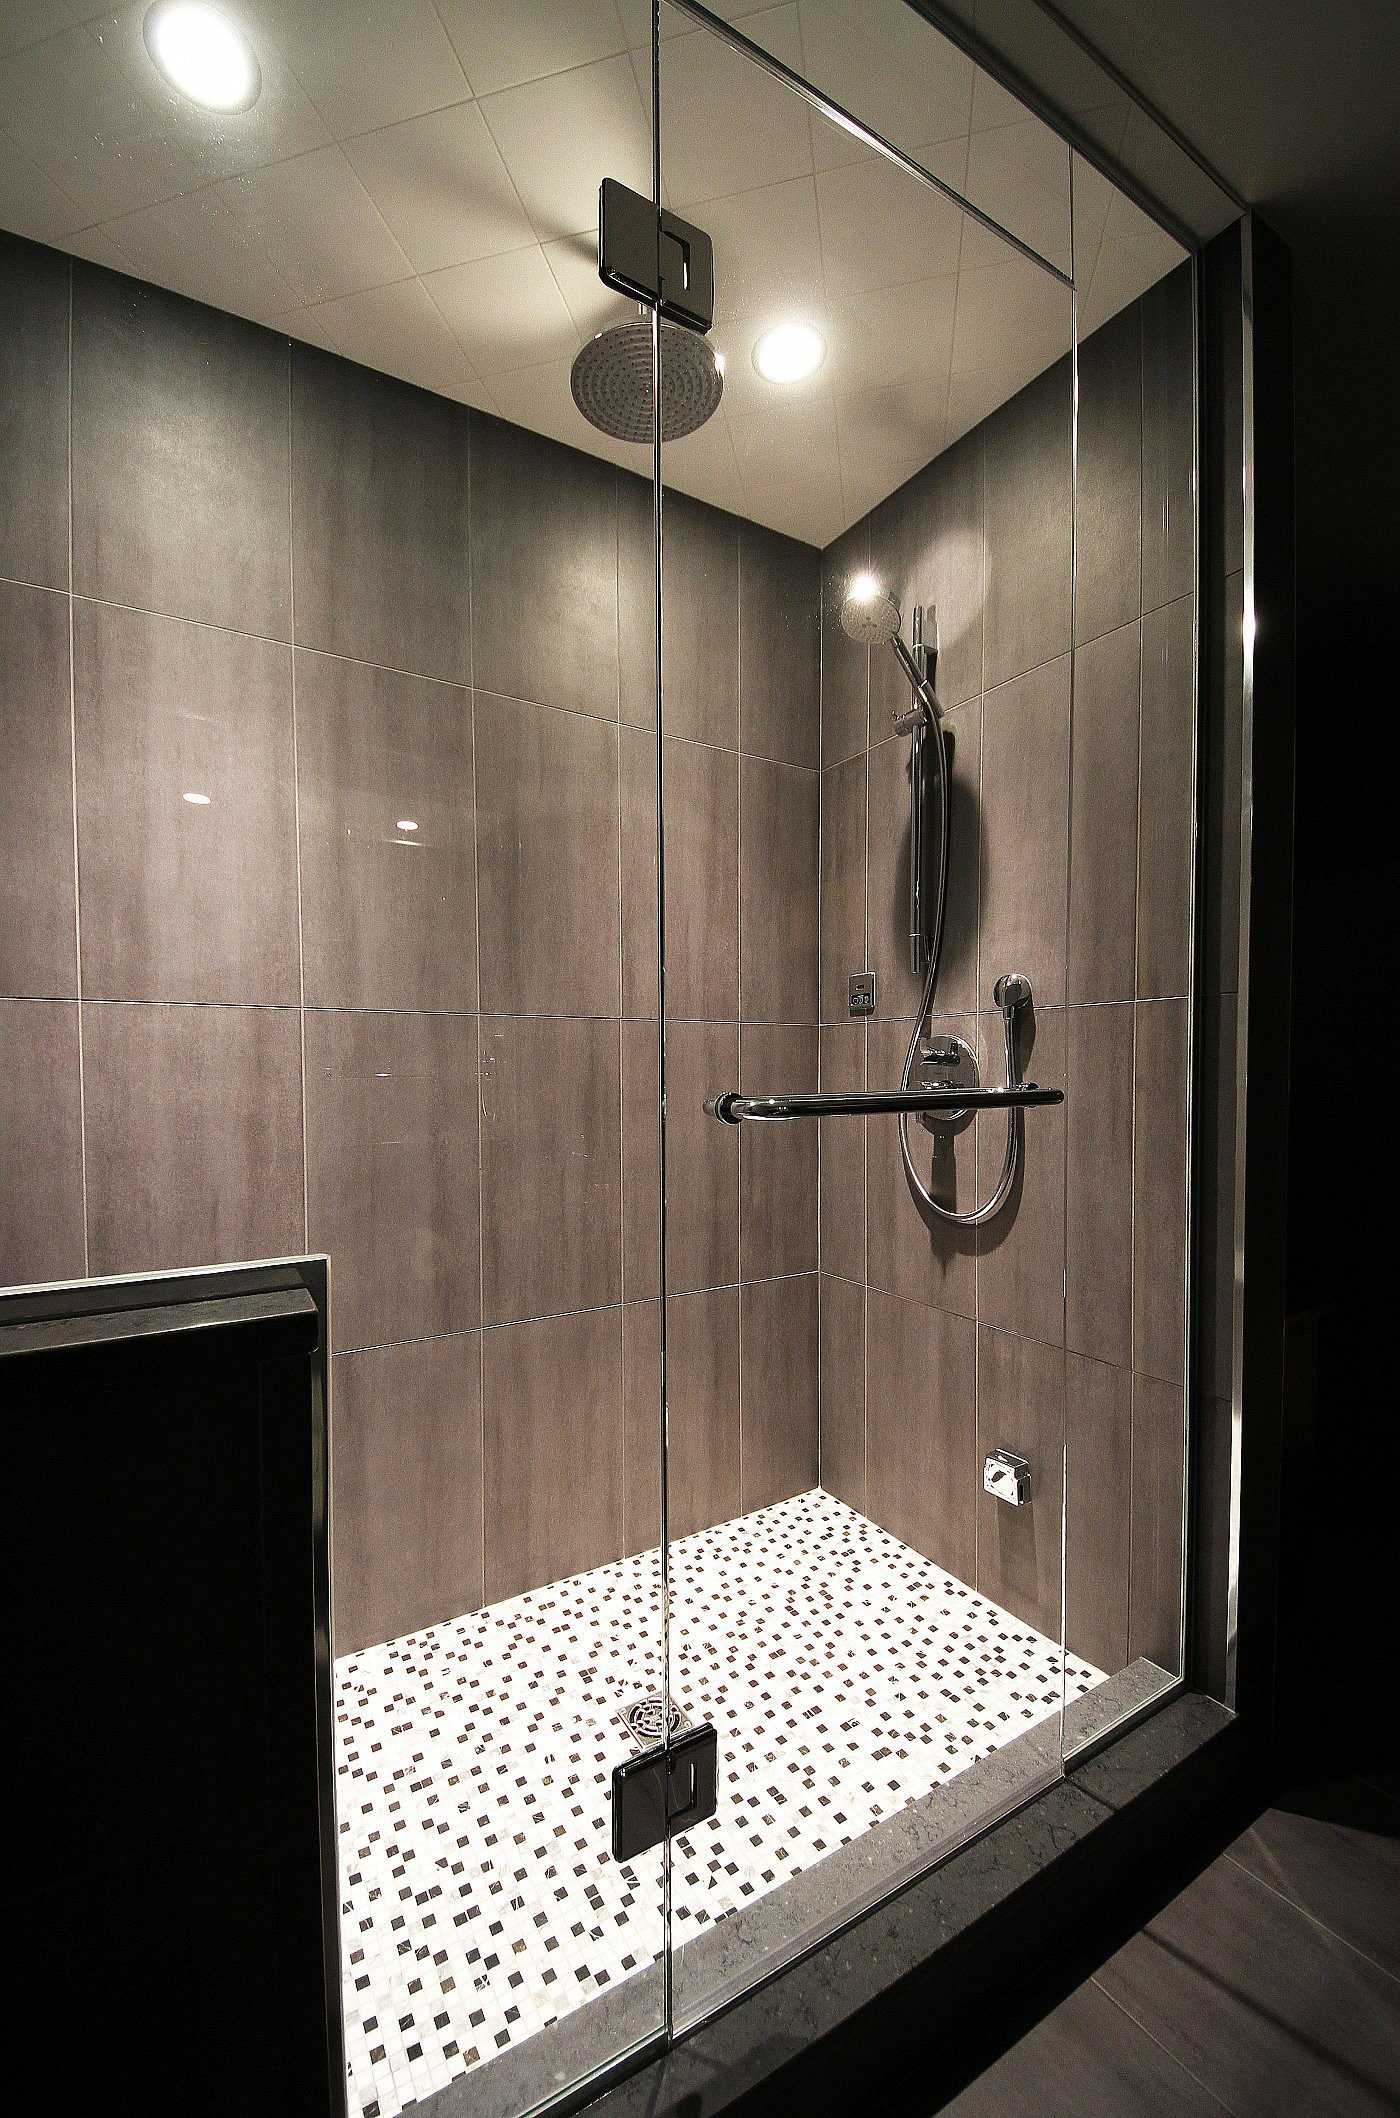 Bathroom Tub Shower Ideas
 Using Pebbles for Unique Natural Decorating Bathroom Ideas